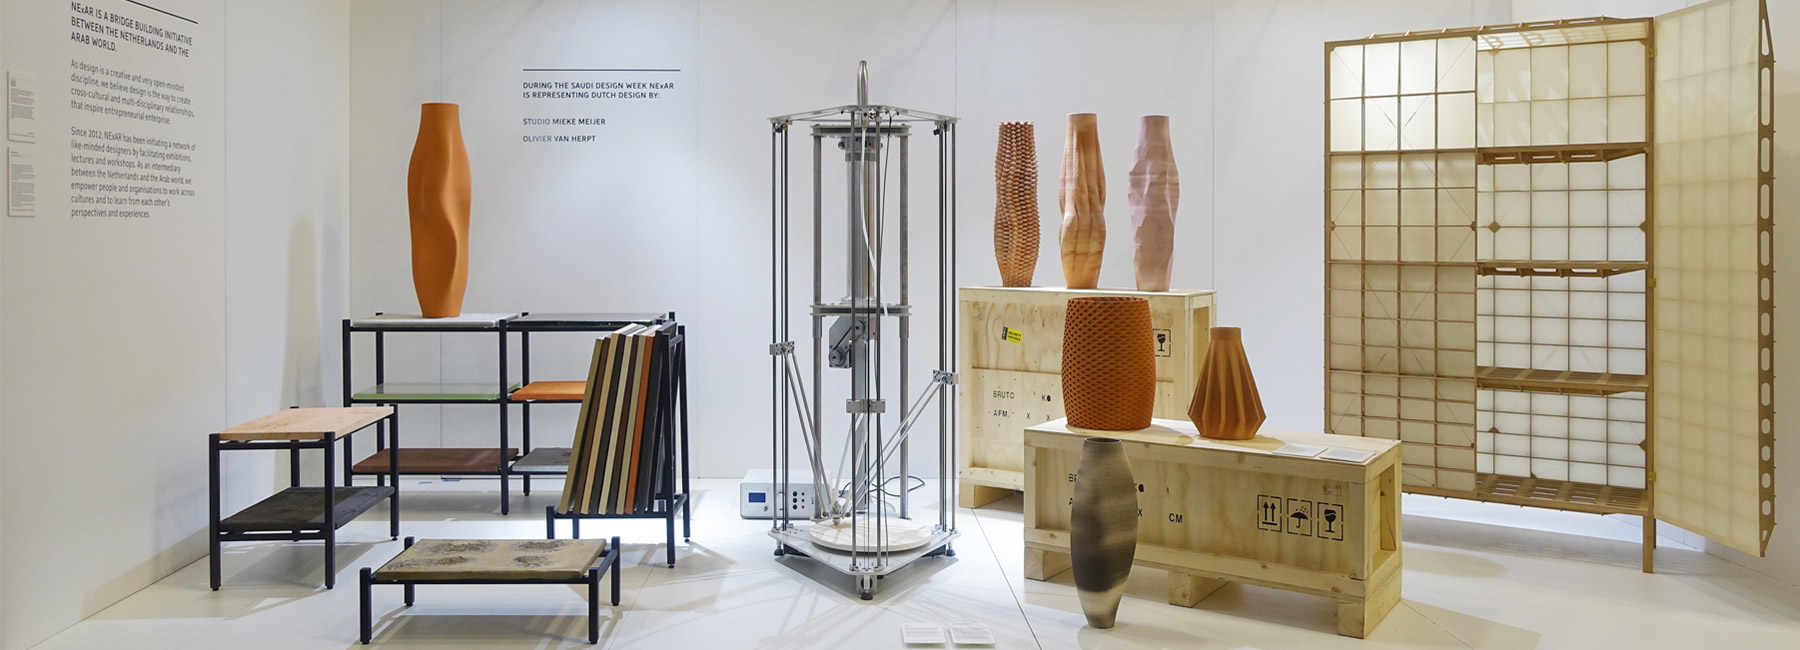 NE+AR's exhibition encompasses dutch design at dubai ...